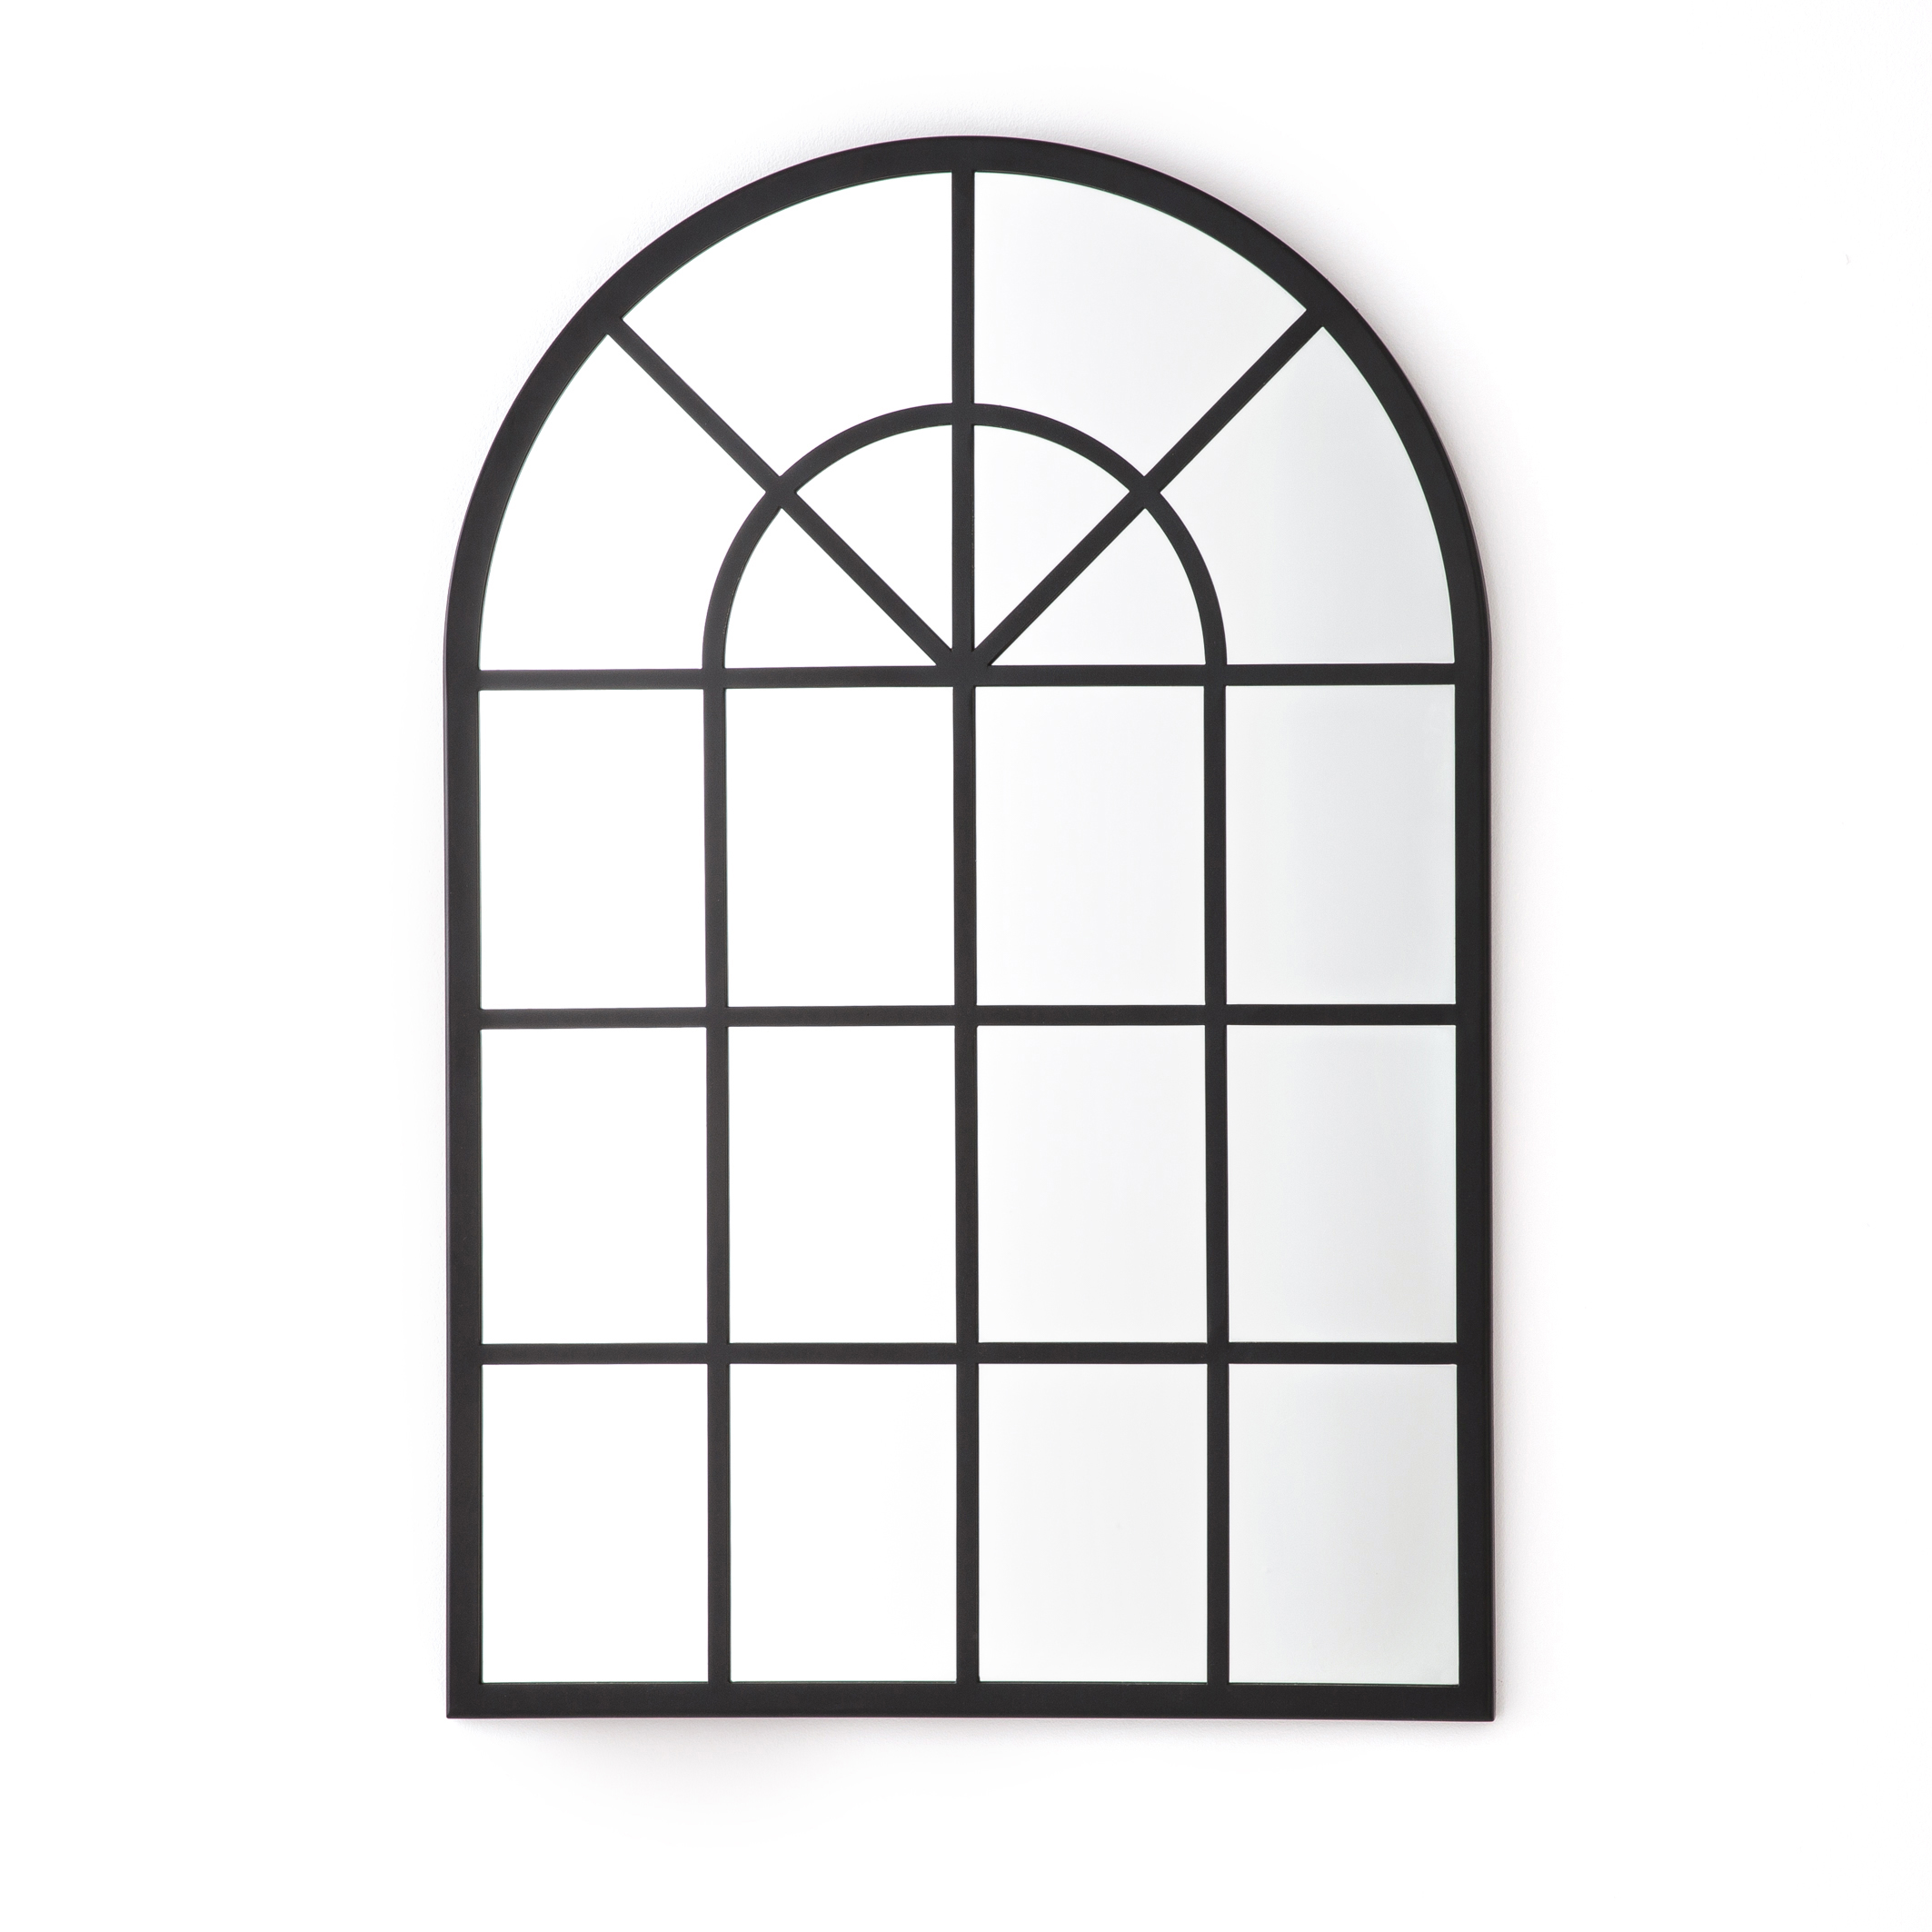 Fenster-spiegel lenaig im industrial style, 60 x 90 cm schwarz La